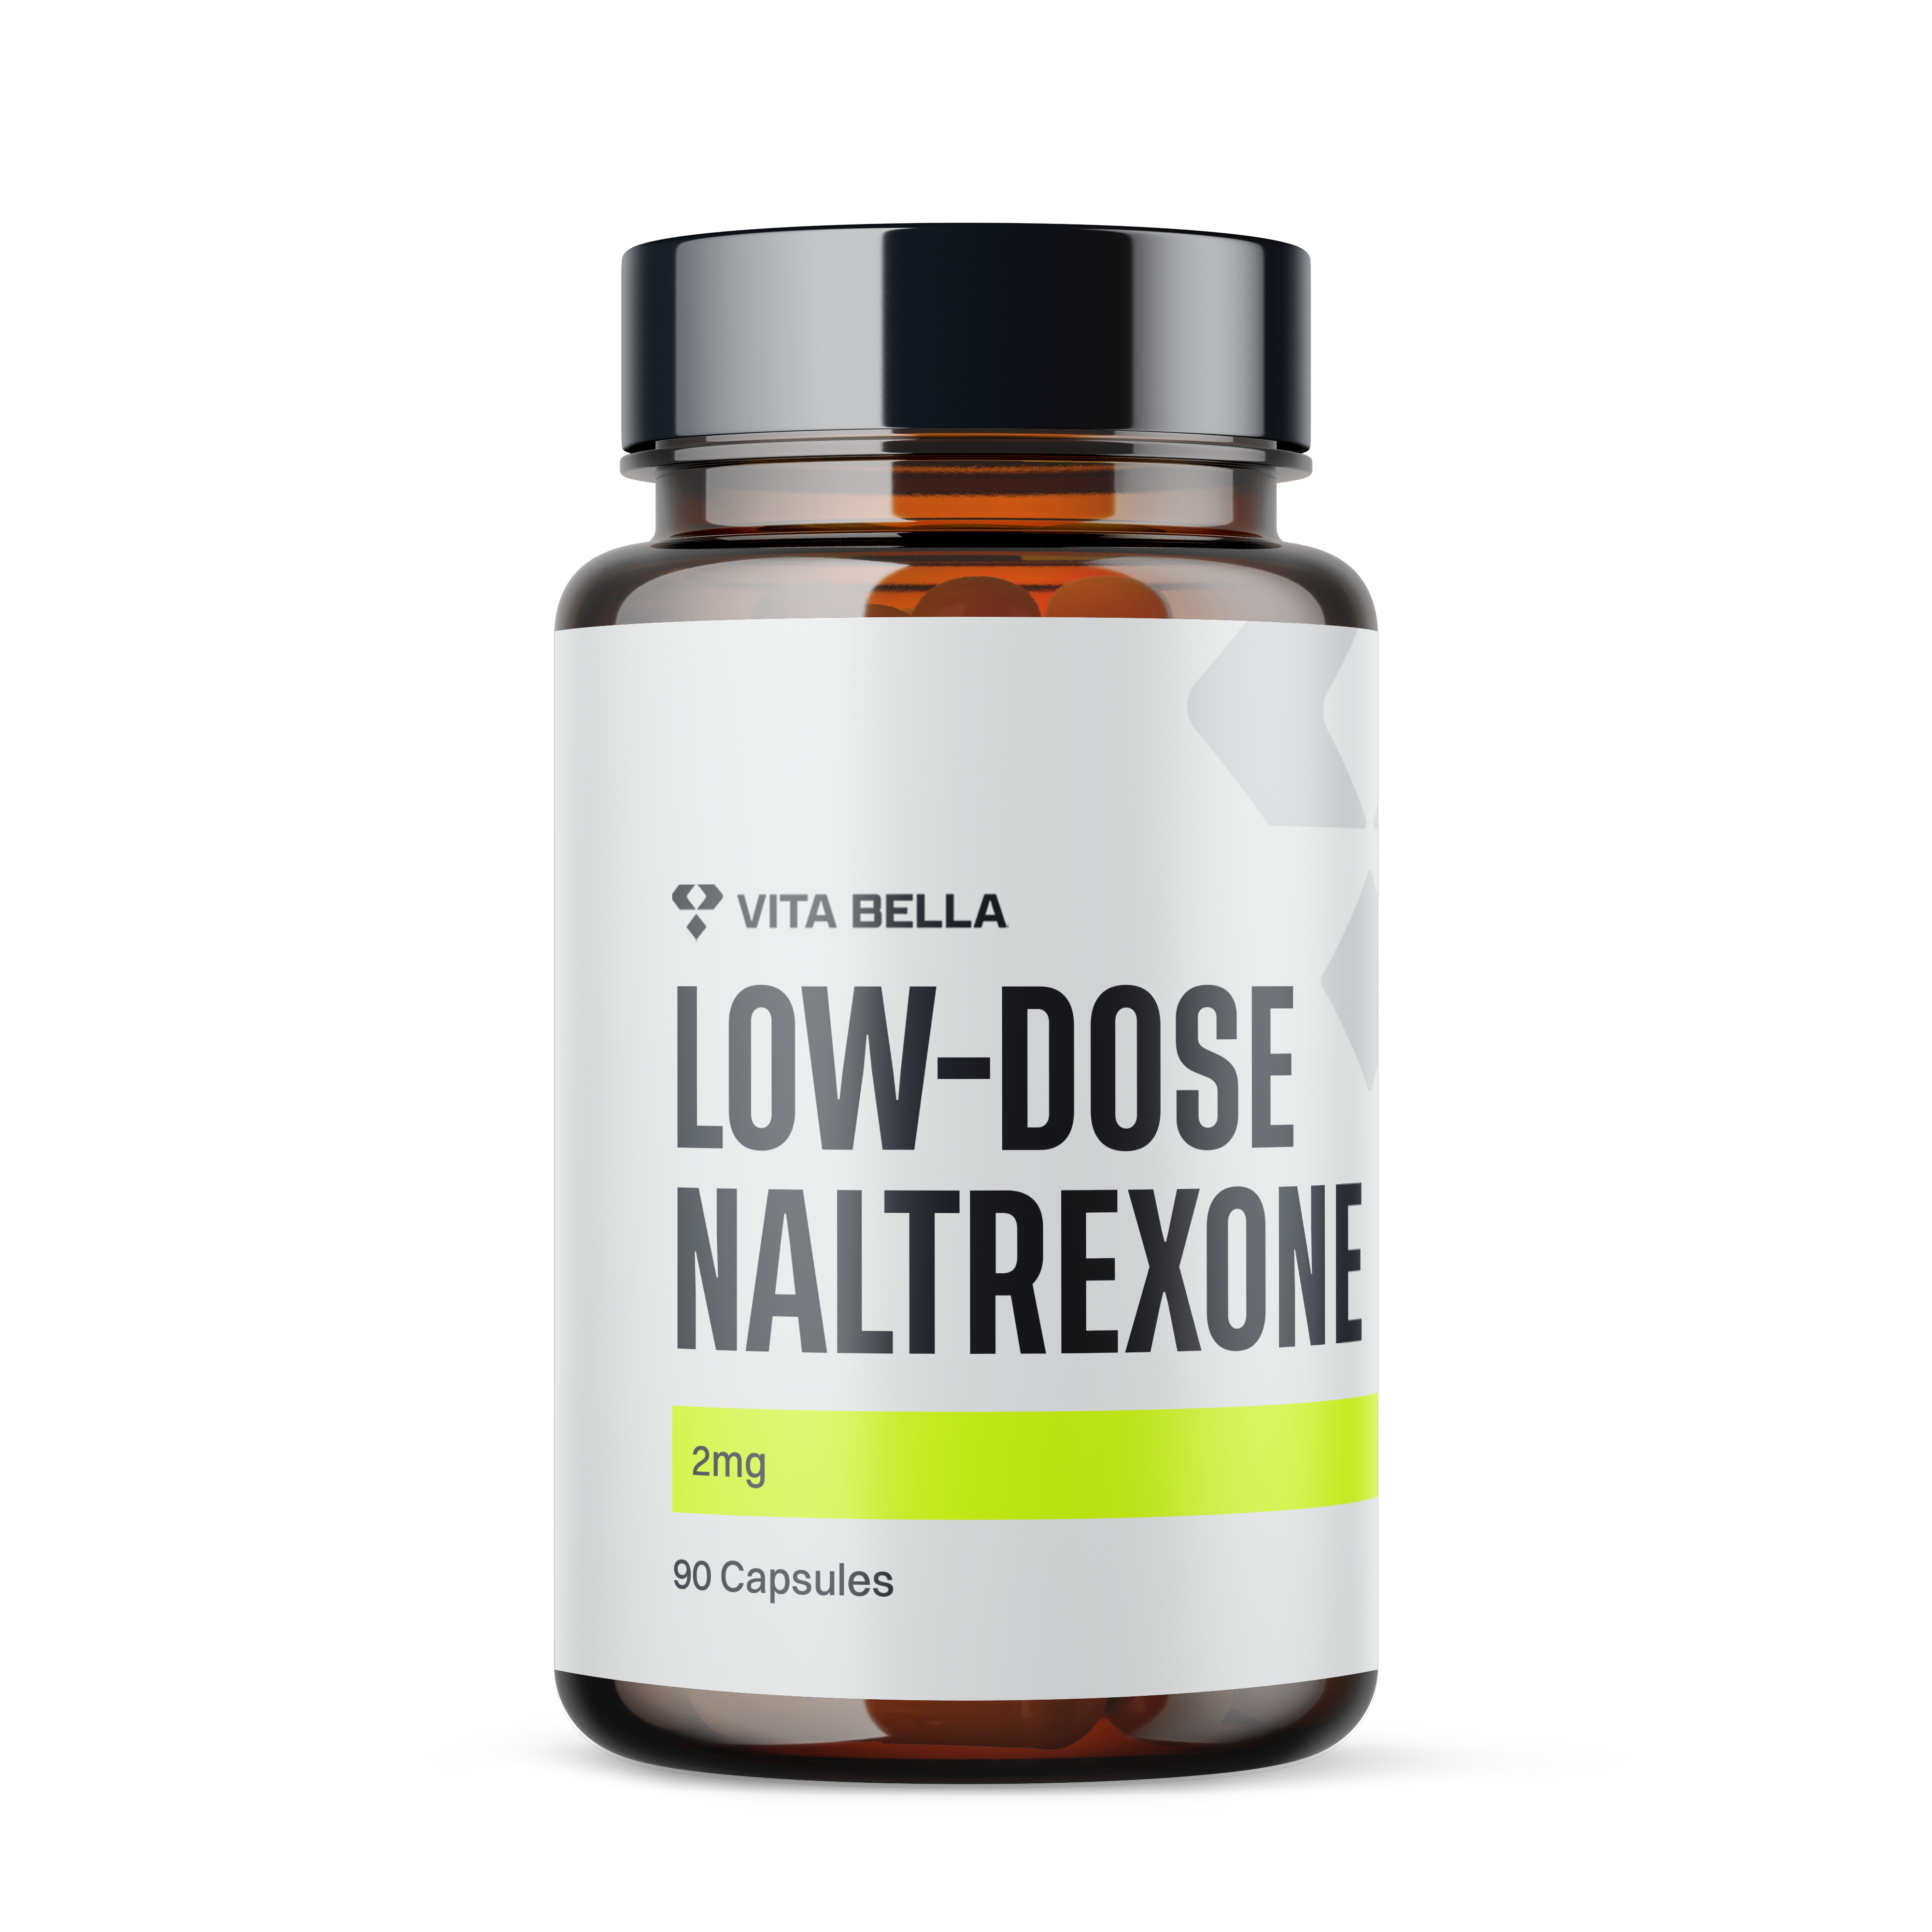 Low-dose Naltrexone capsules